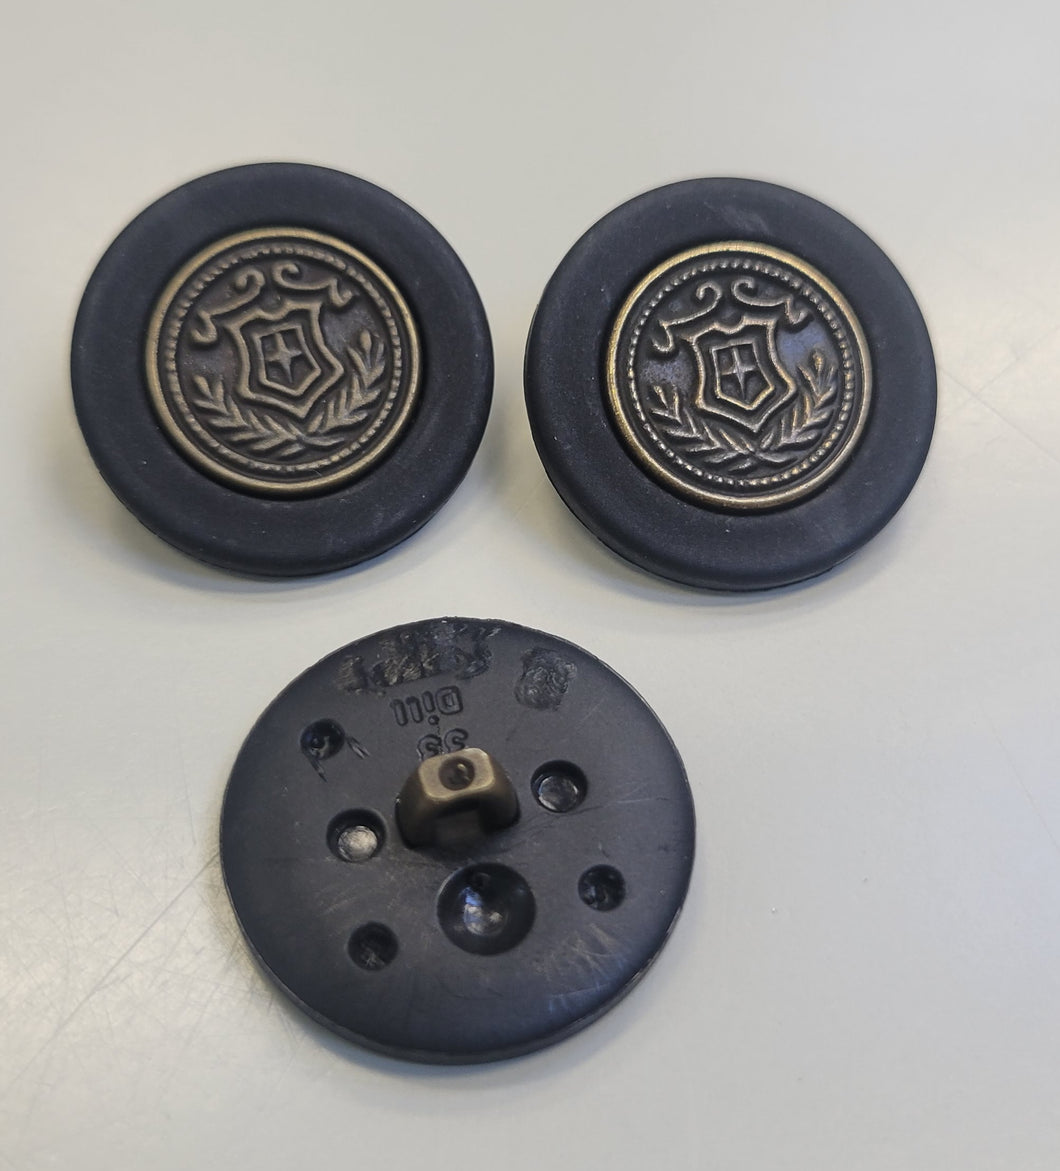 Button w/ Decorative Metal Emblem Design